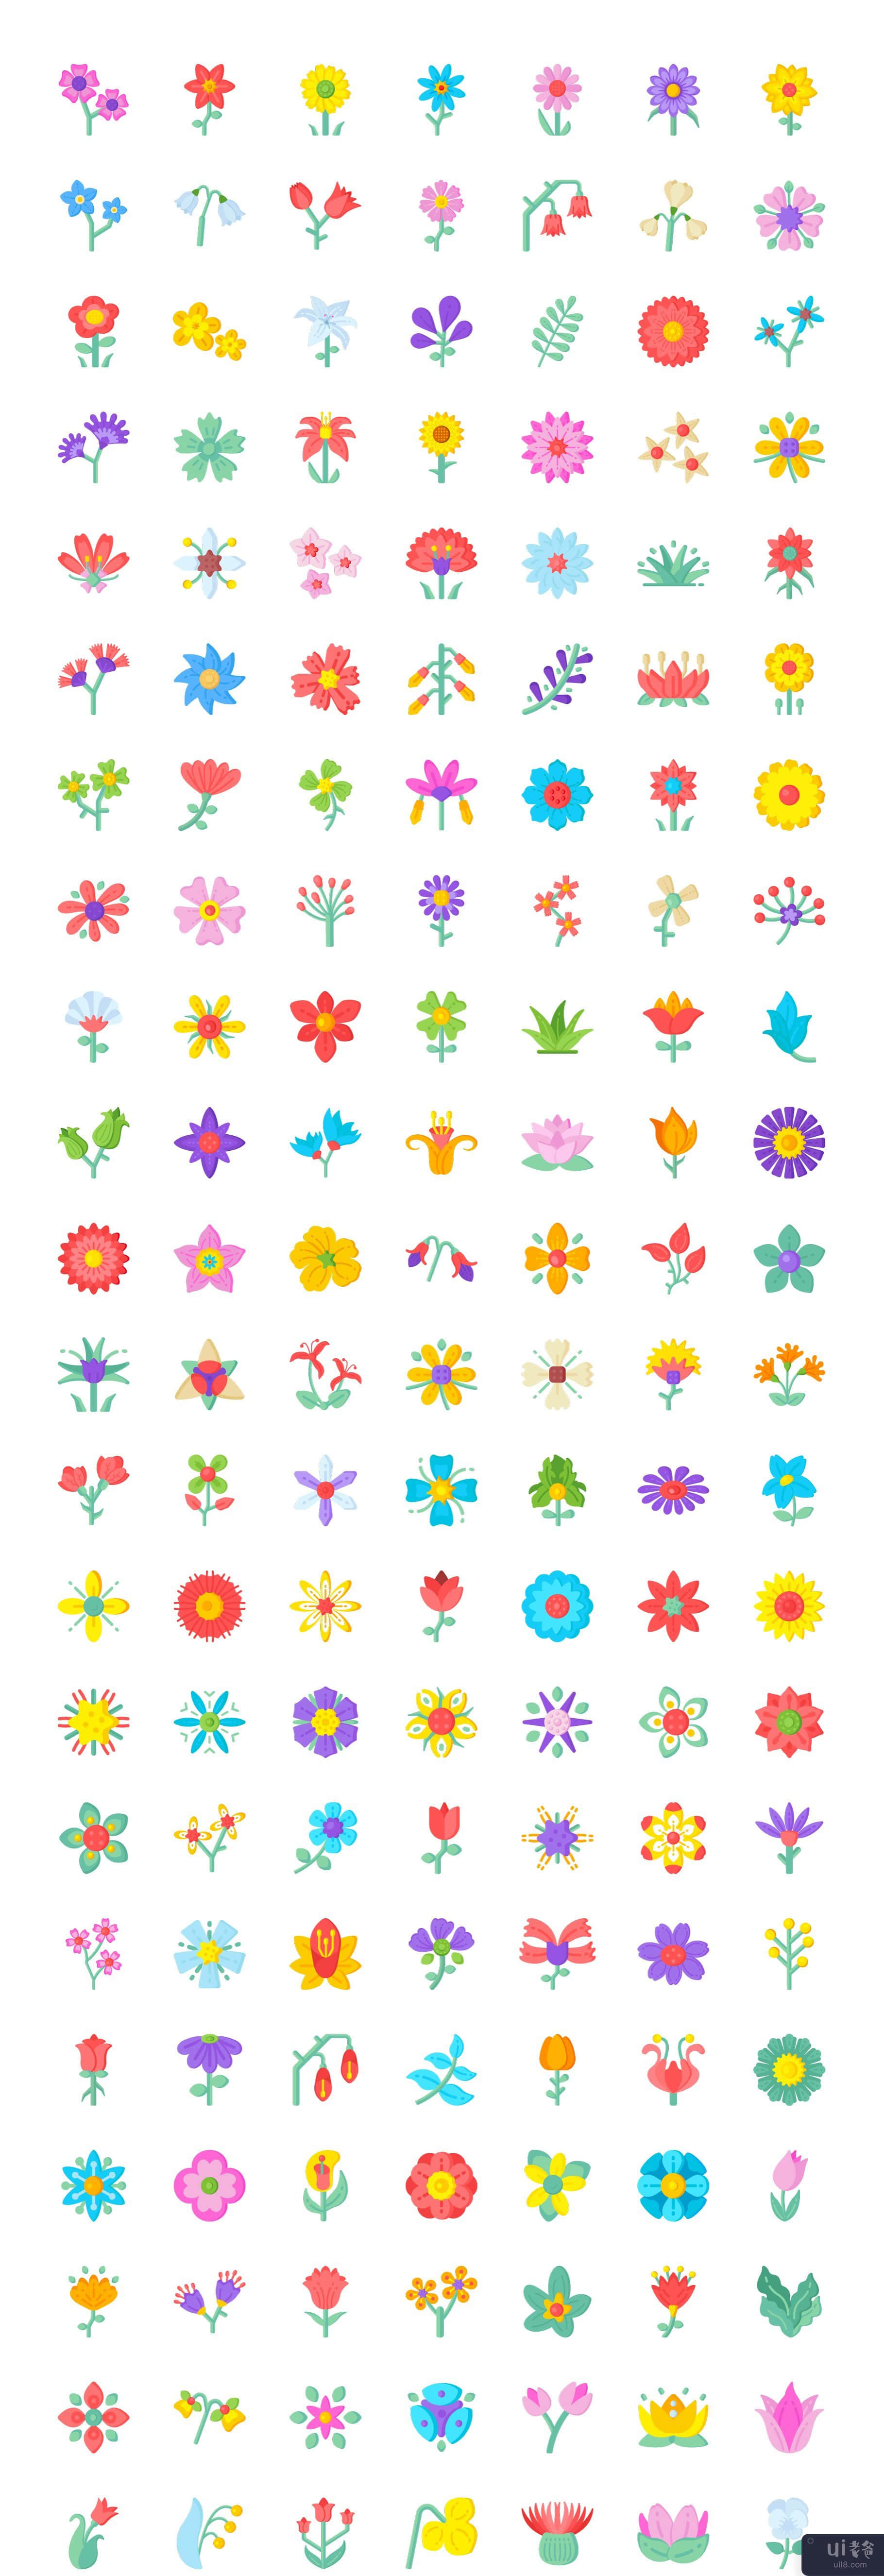 300 平花图标(300 Flat Flower Icons)插图1